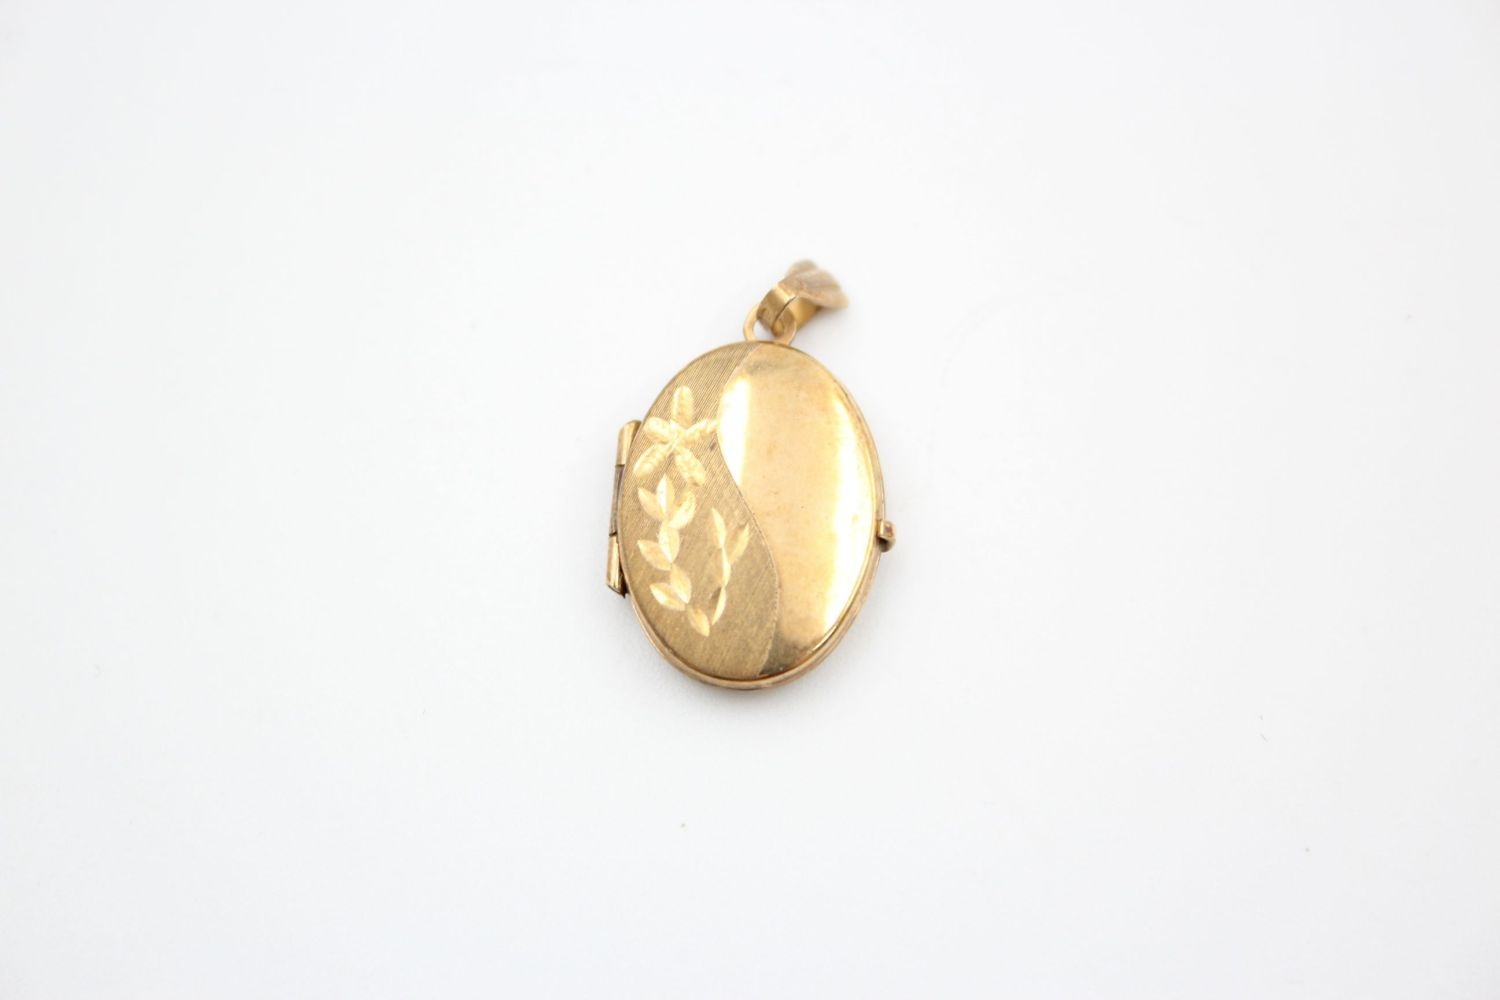 2 x 9ct gold patterned locket pendants 3 grams gross - Image 5 of 8